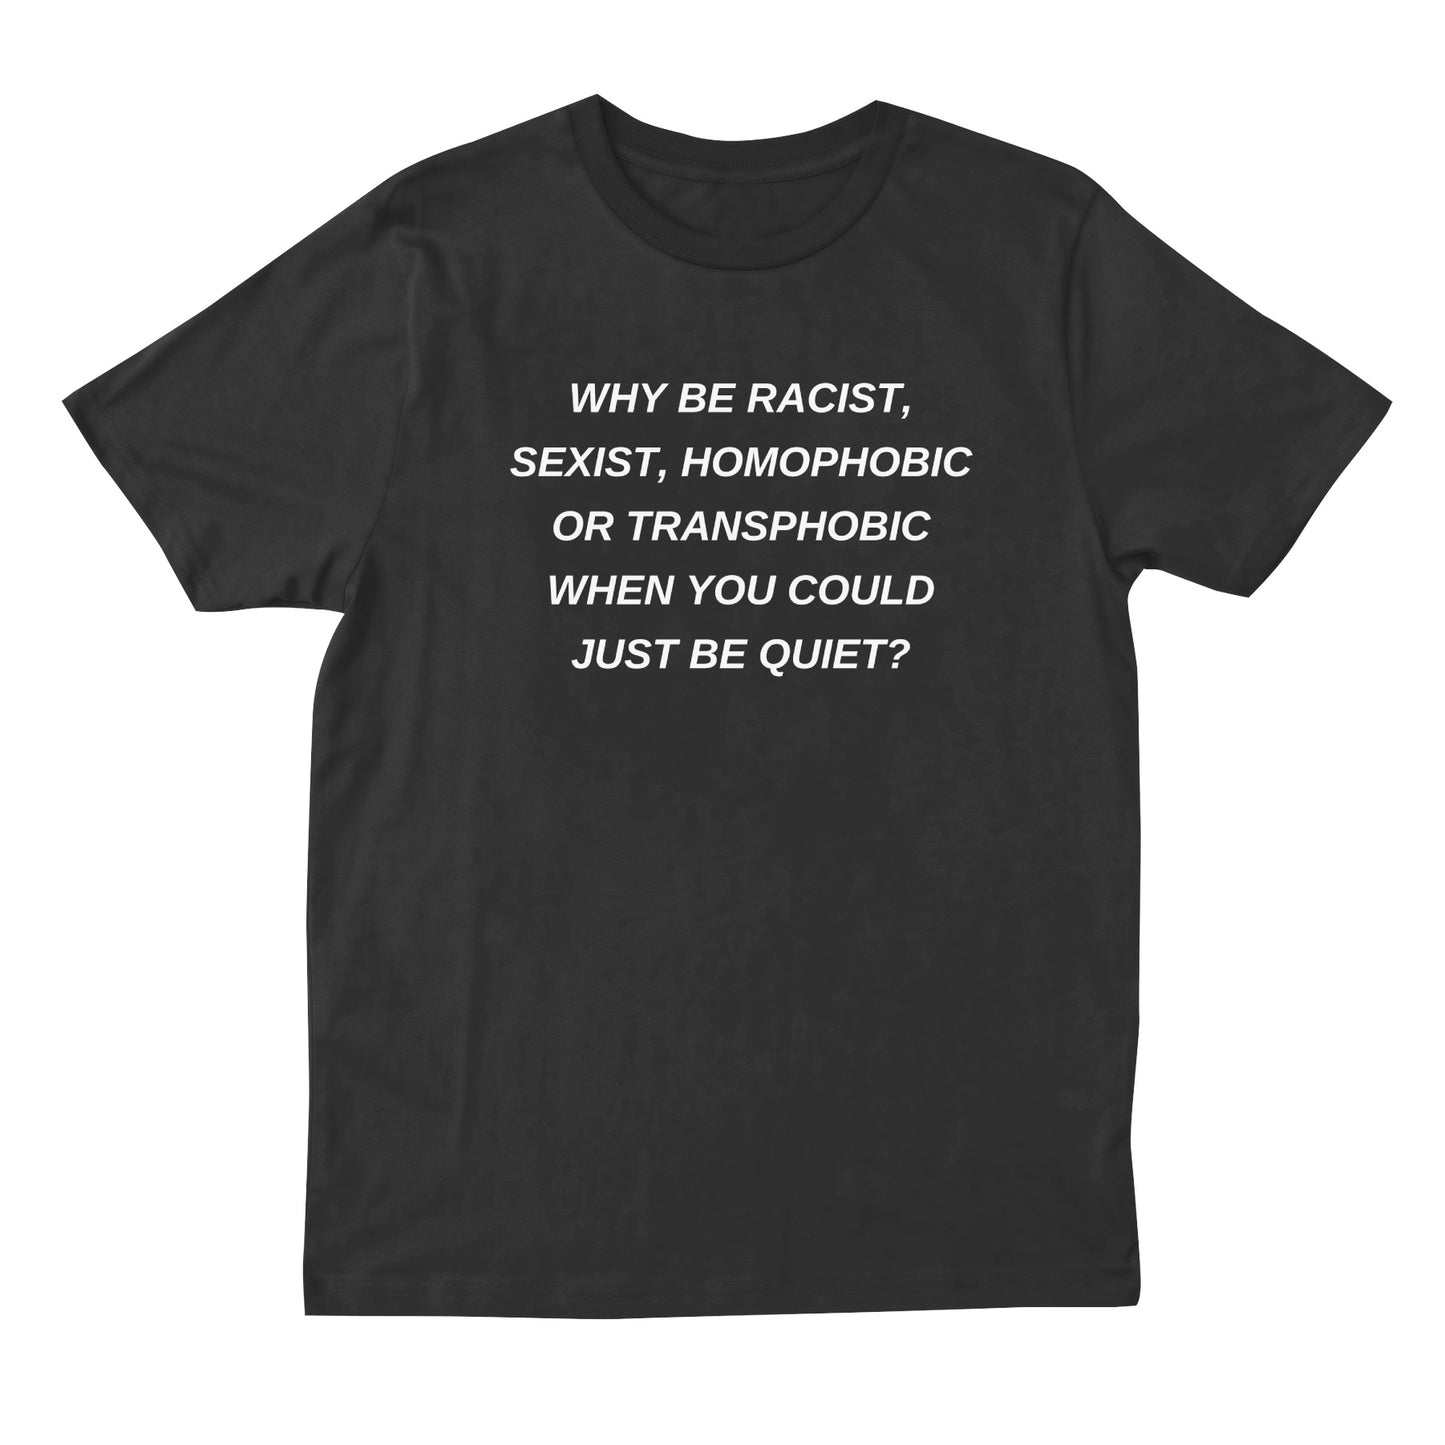 pride t-shirt